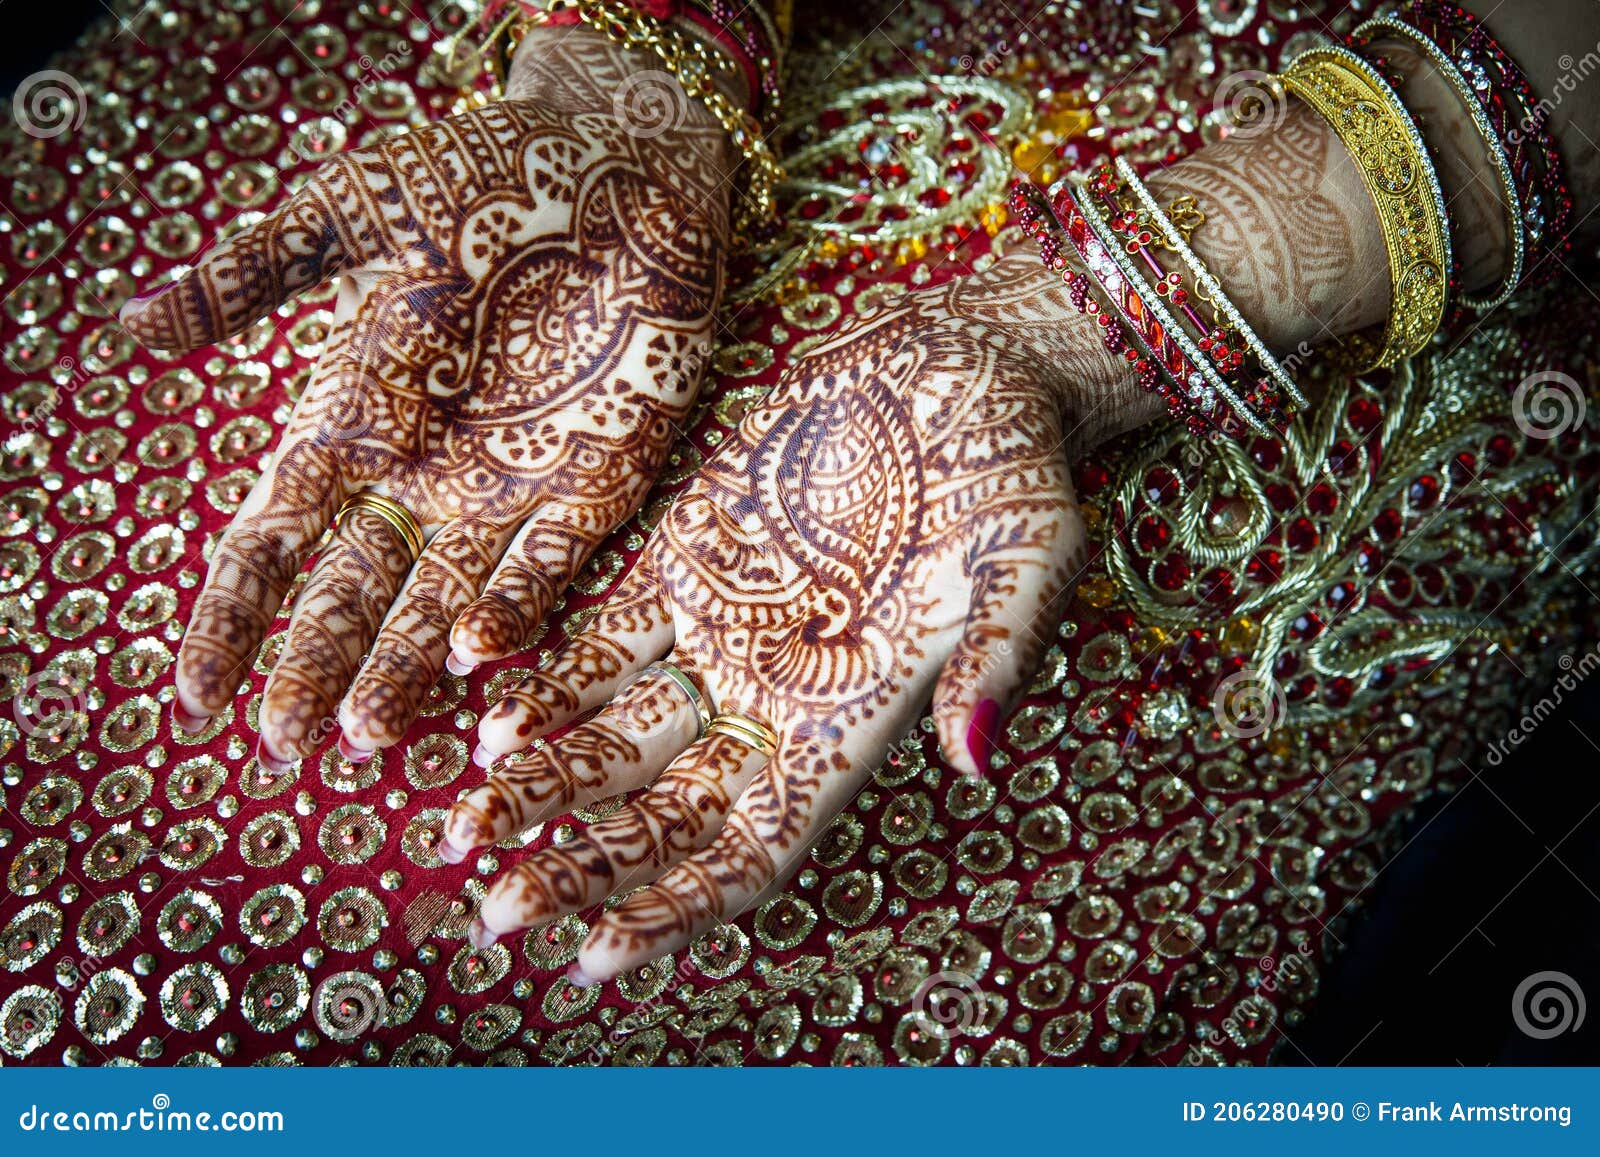 Discover 166+ hindu wedding tattoos best